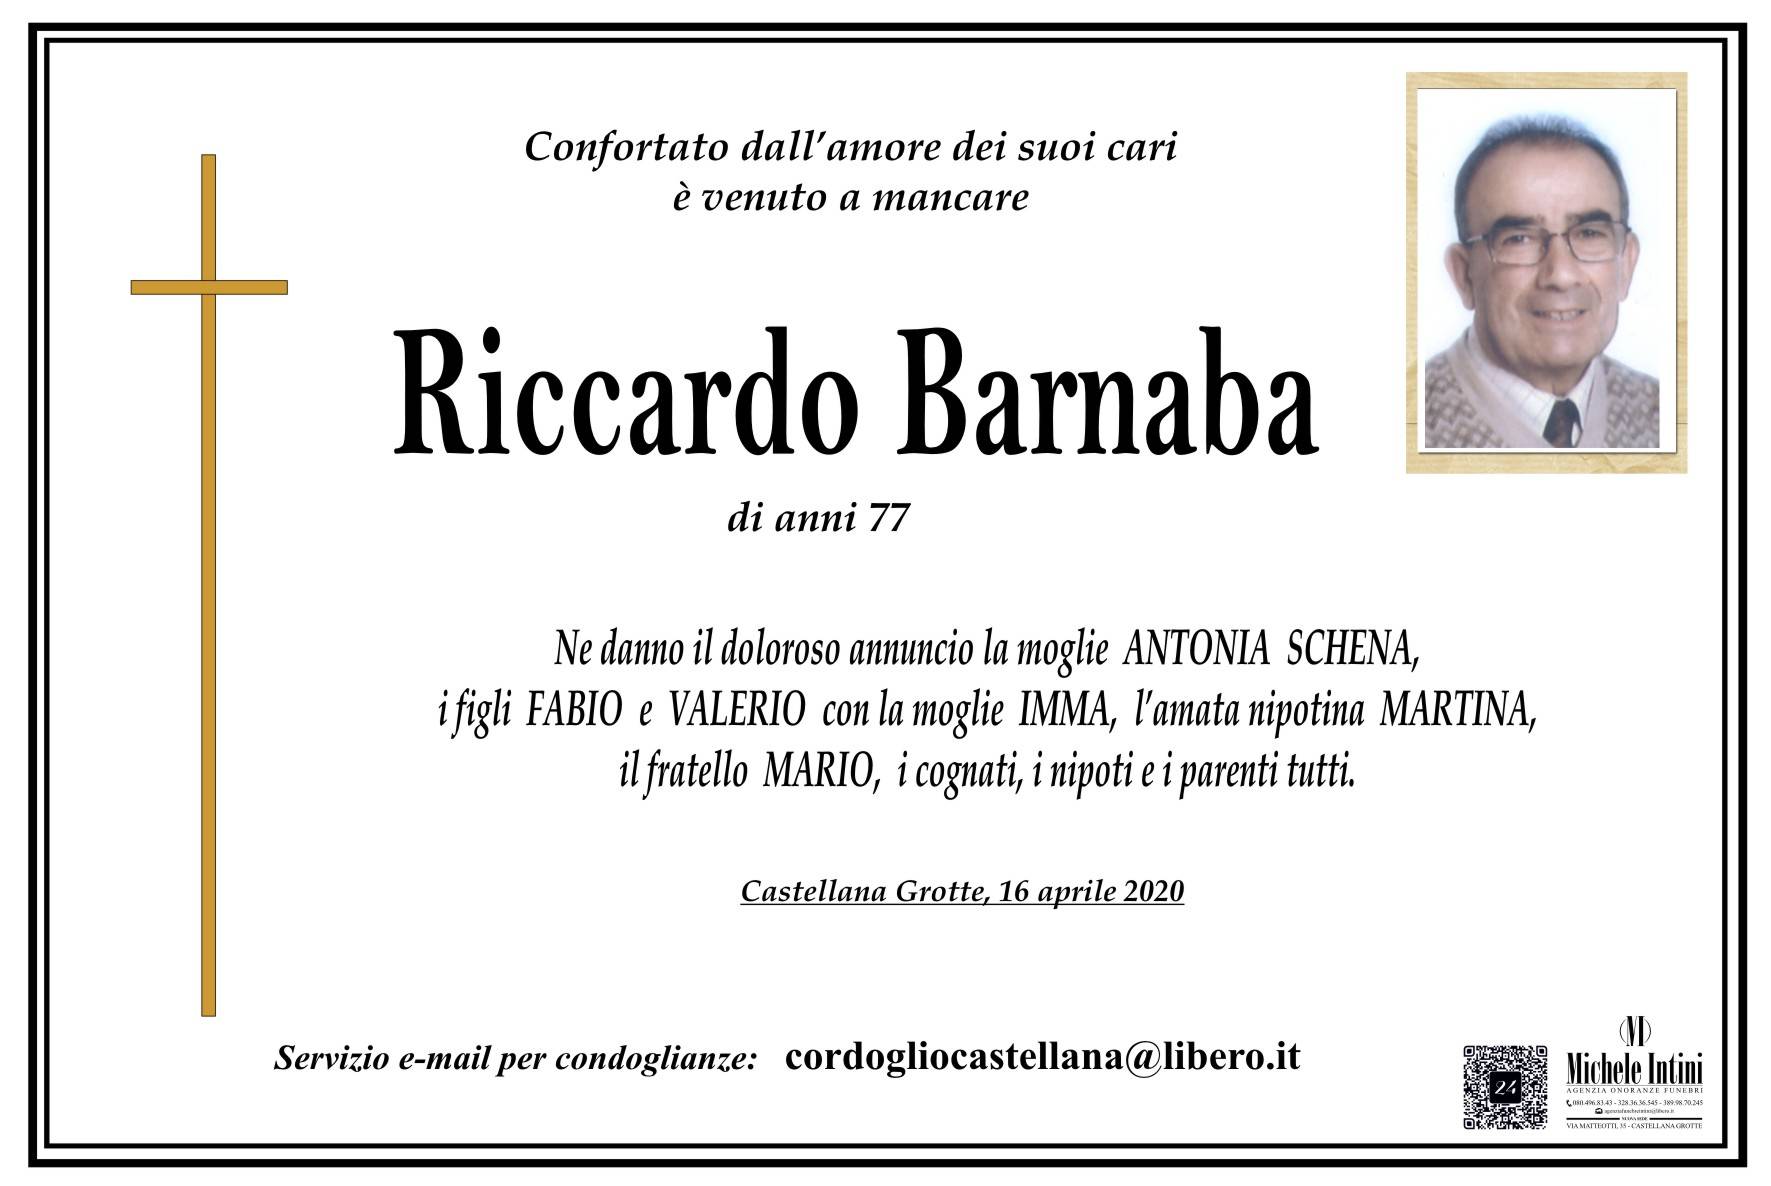 Riccardo Barnaba